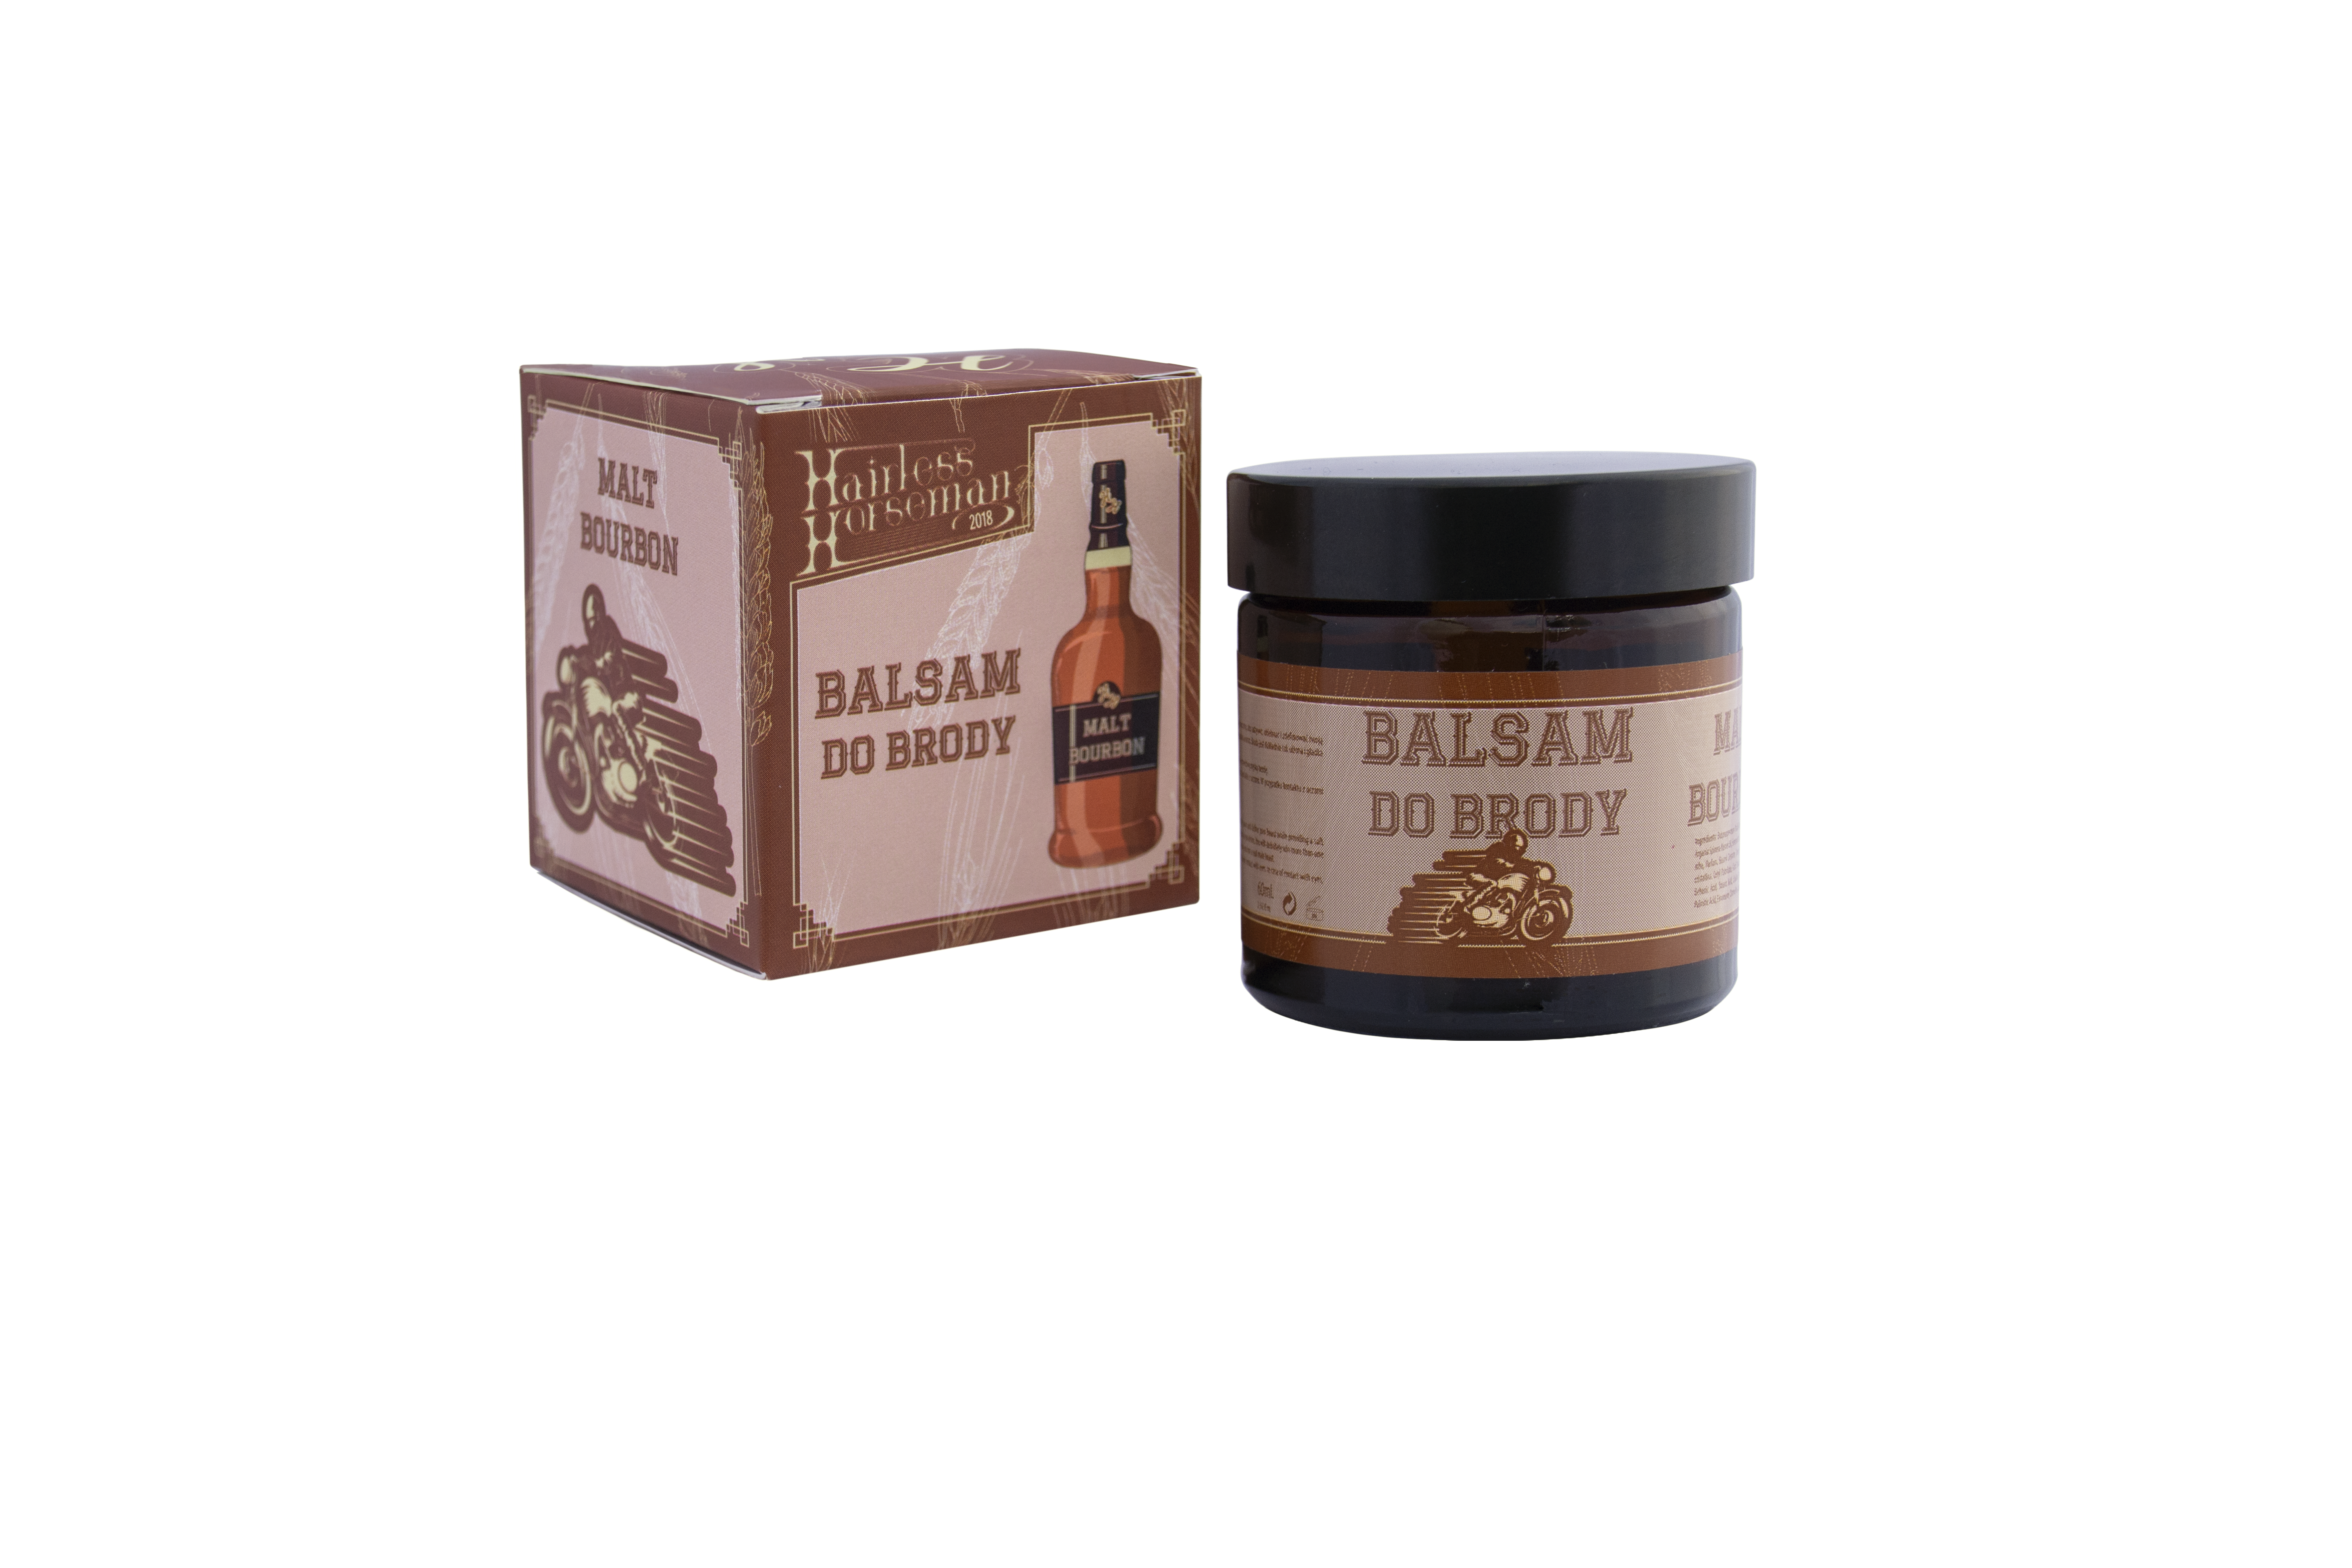 Hairless Horseman Balsam do brody Malt Bourbon – BEARD BALM MALT BOURBON